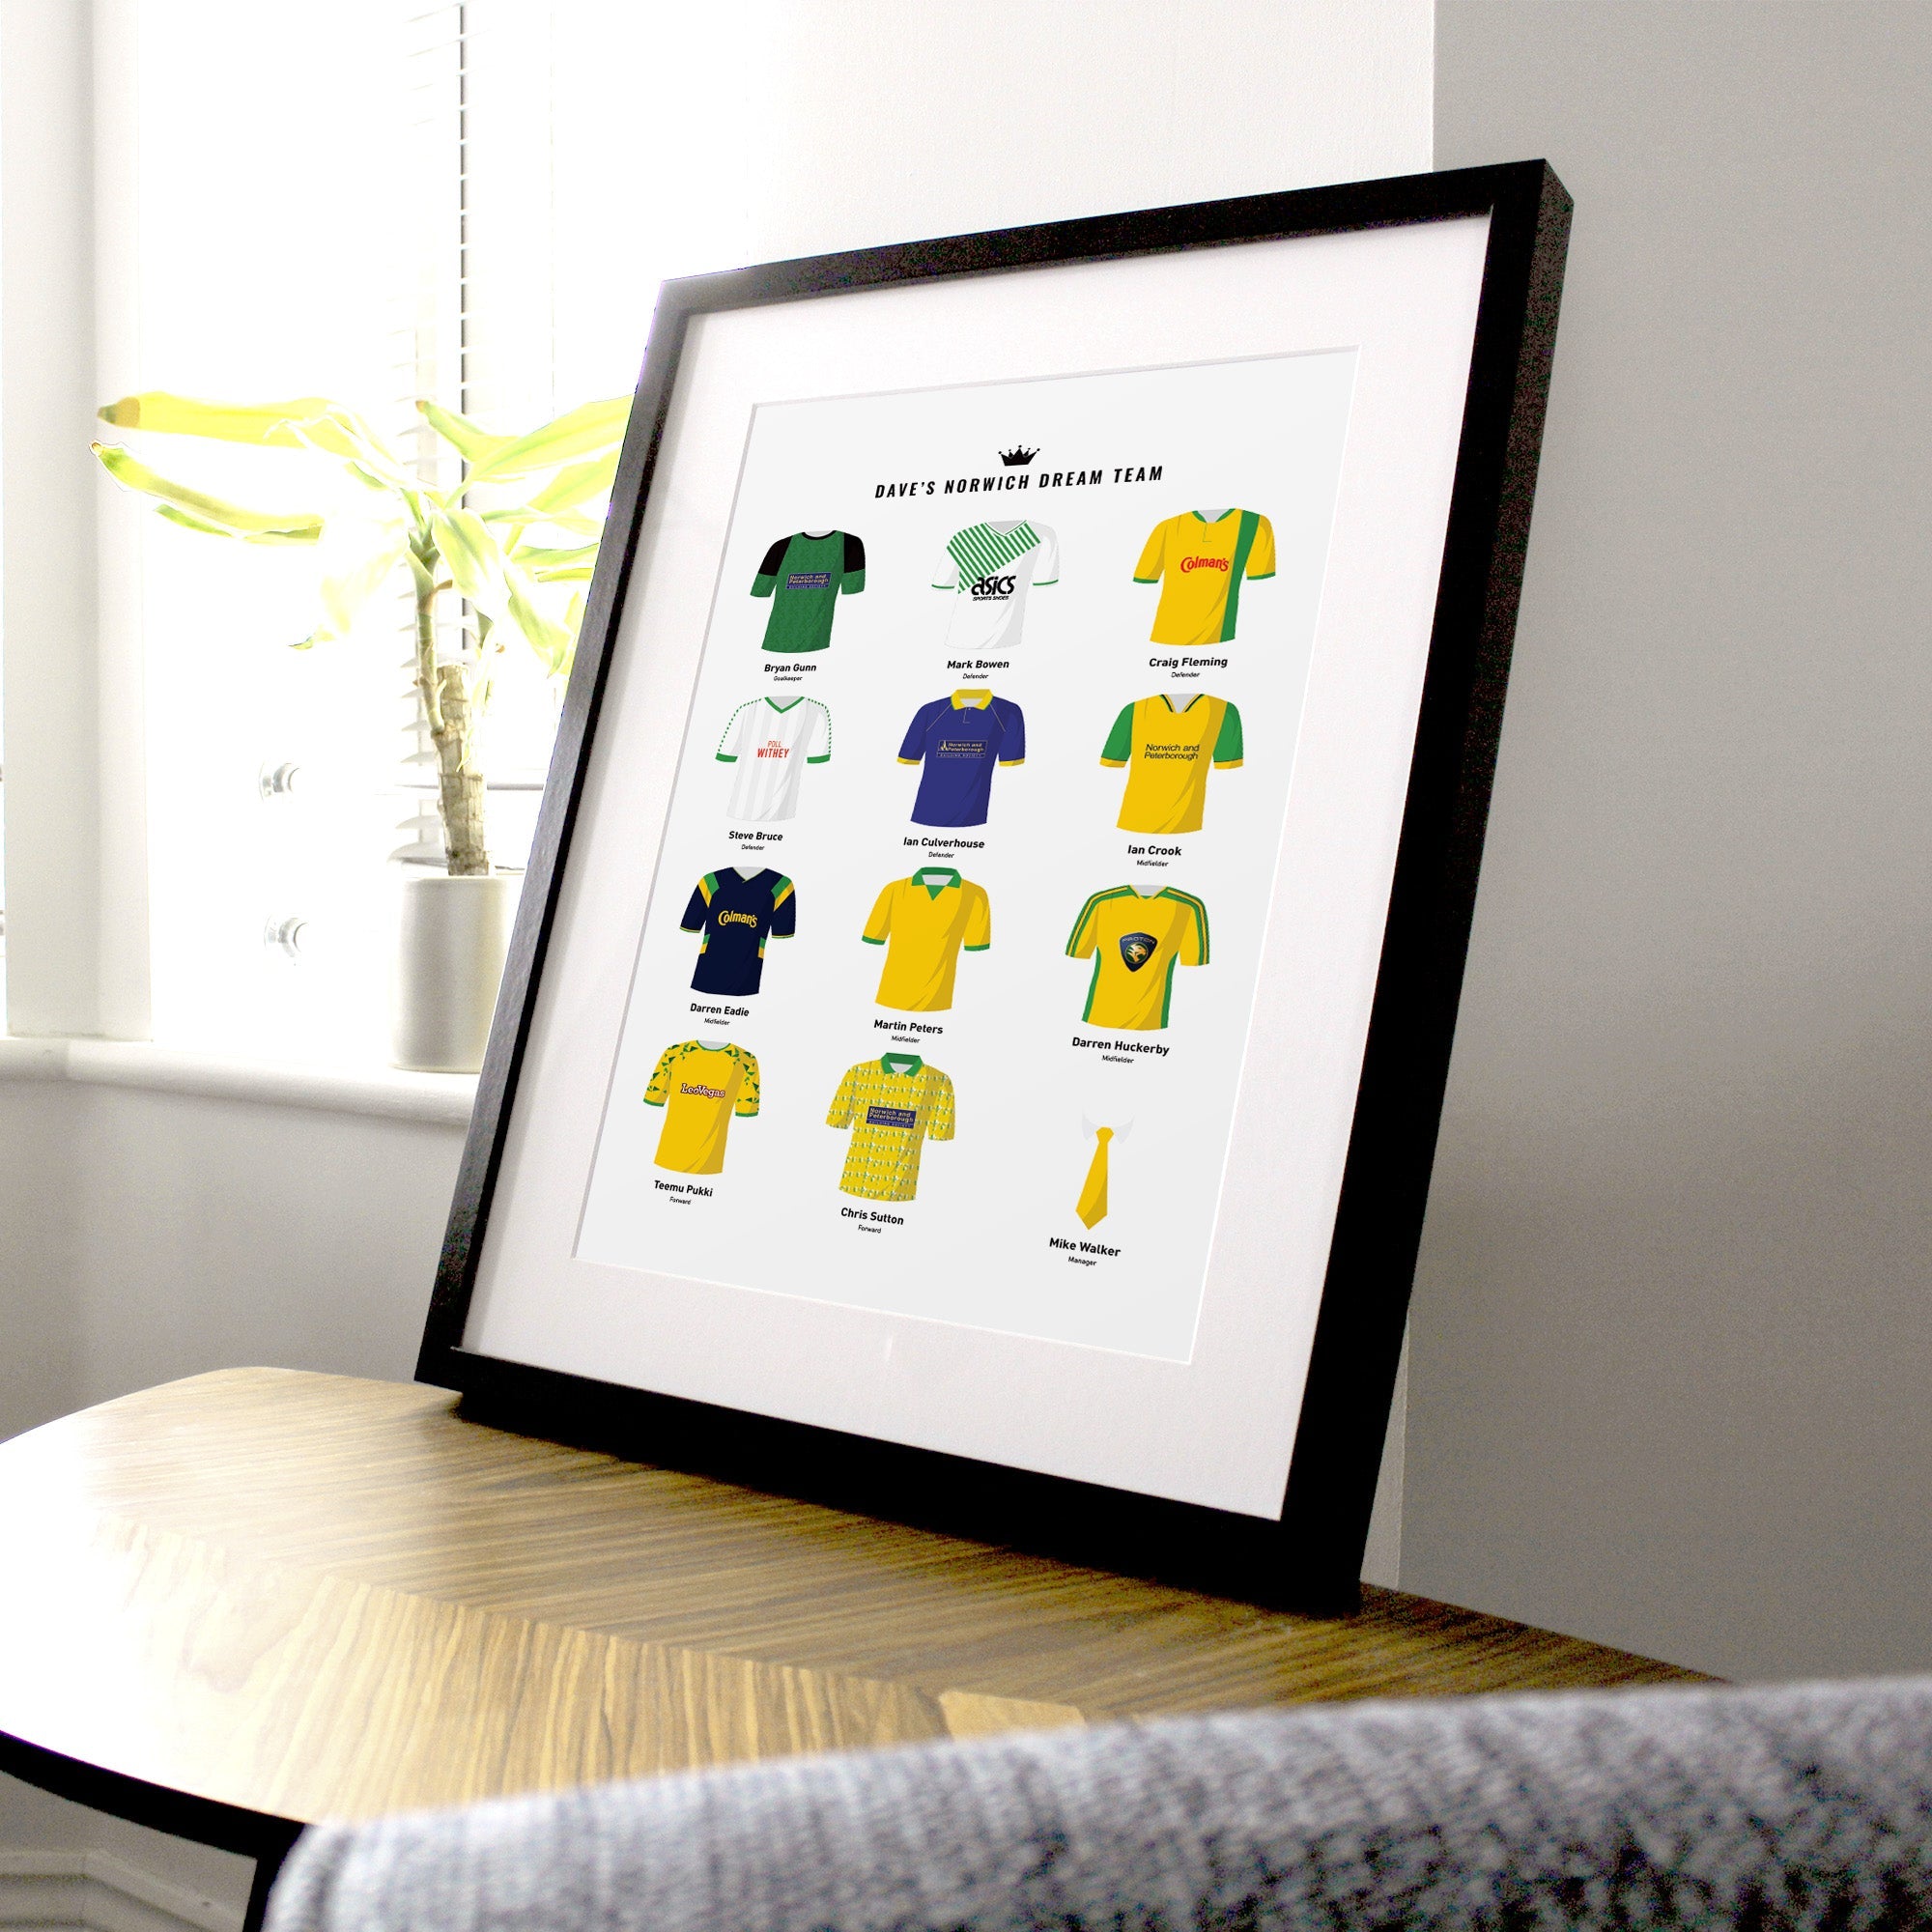 PERSONALISED Norwich Dream Team Football Print Good Team On Paper